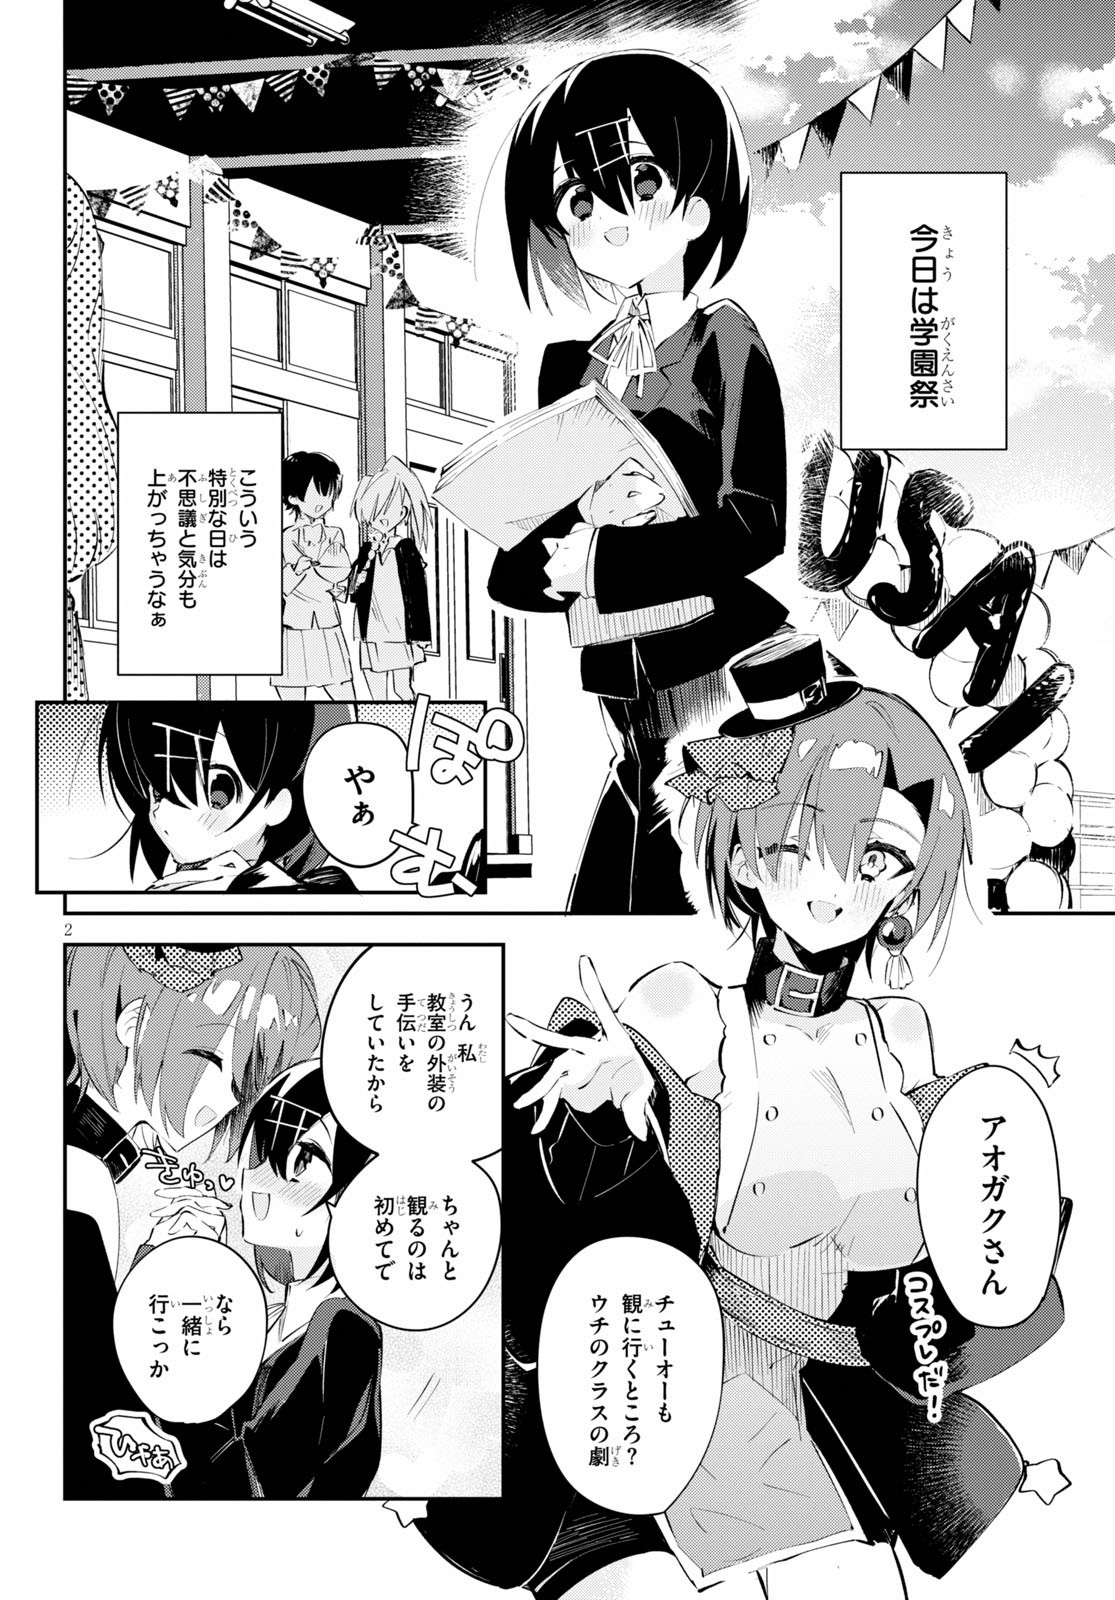 Daigaku-chan × High School - Chapter 13 - Page 2